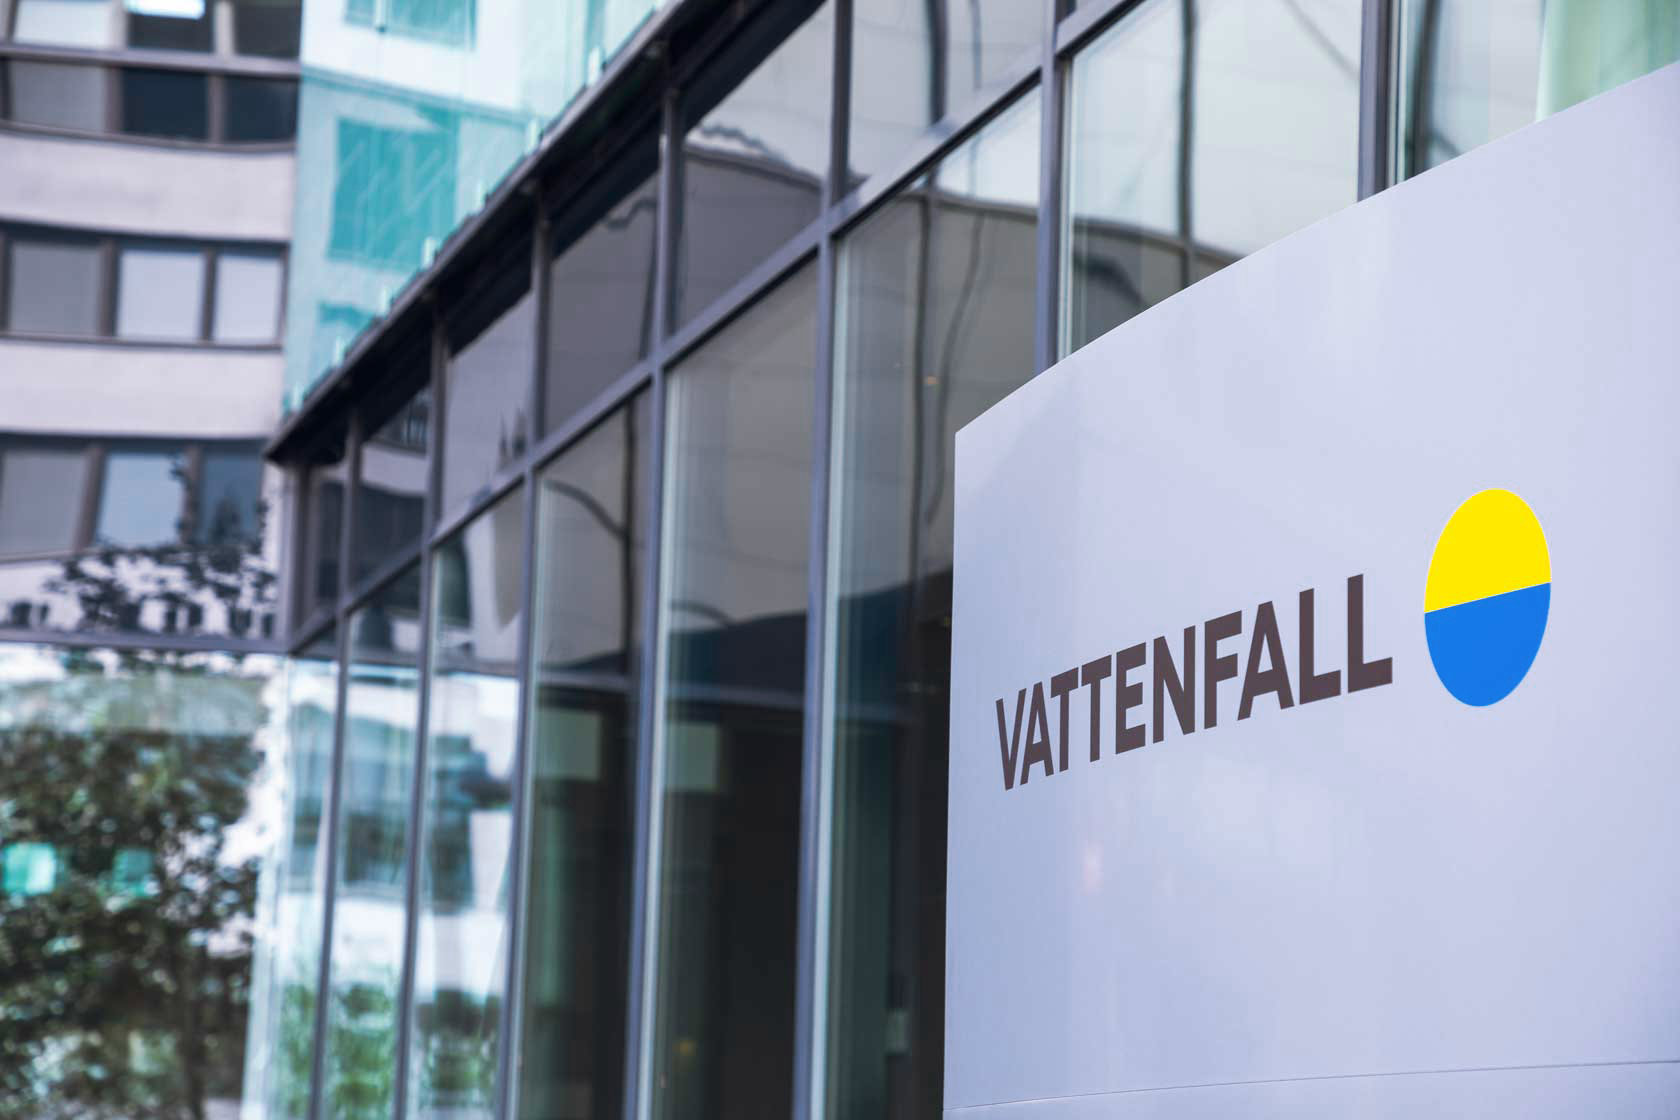 Vattenfall's headquarters in Solna, Sweden